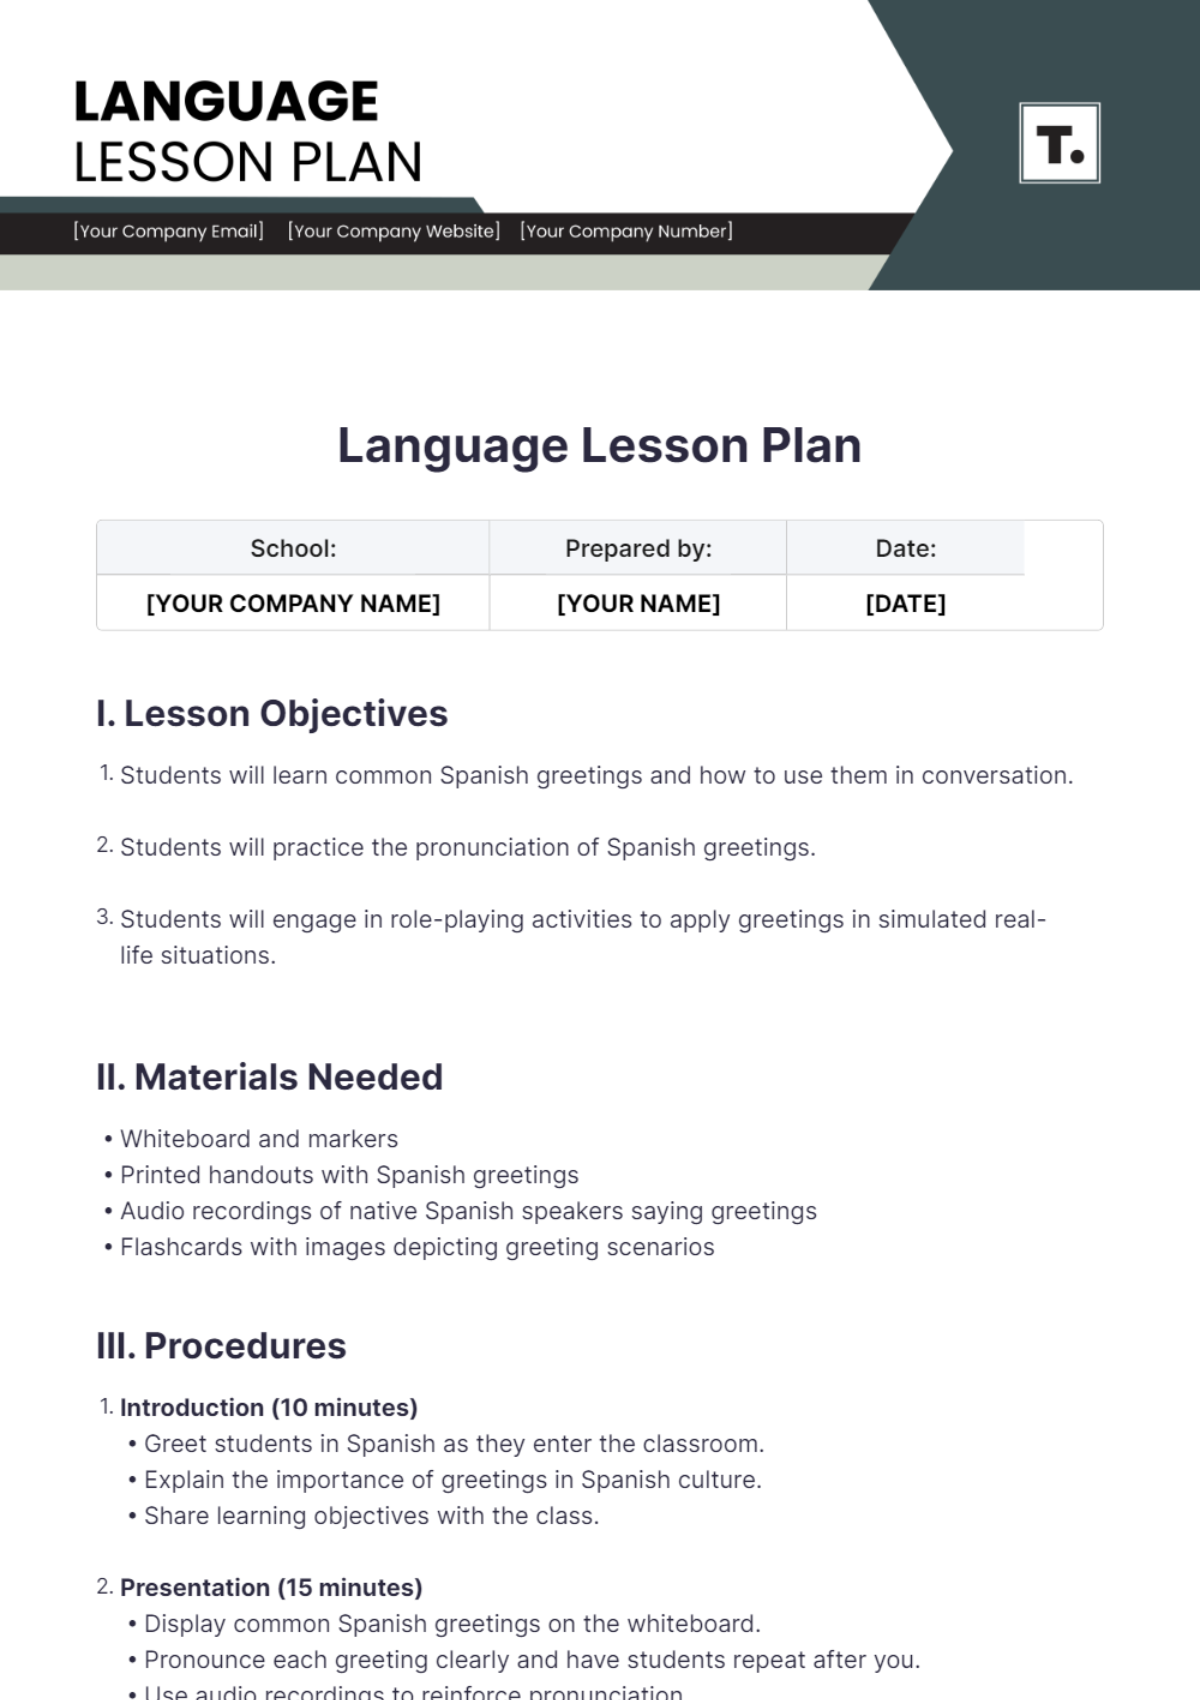 Free Language Lesson Plan Template